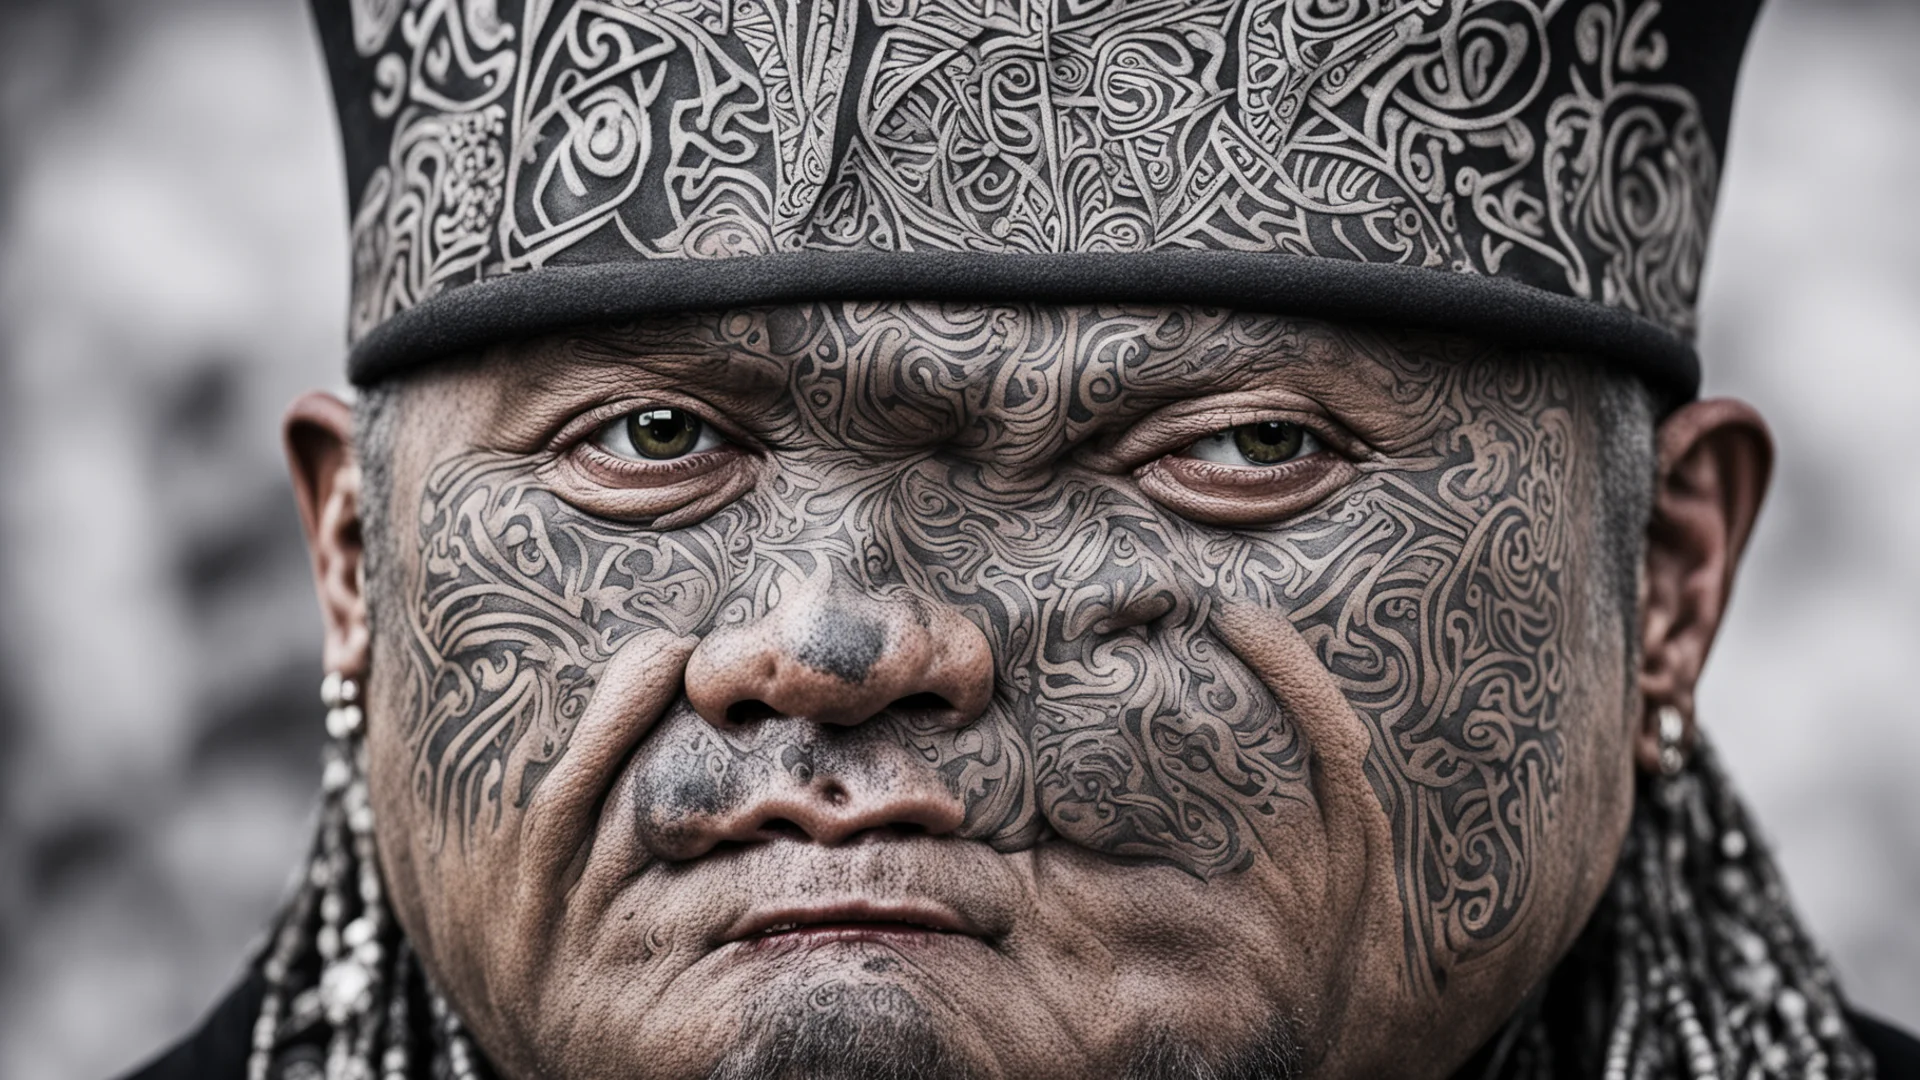 aimaori cheif moko facial tatoos menacing close up face top hat amazing awesome portrait 2 wide